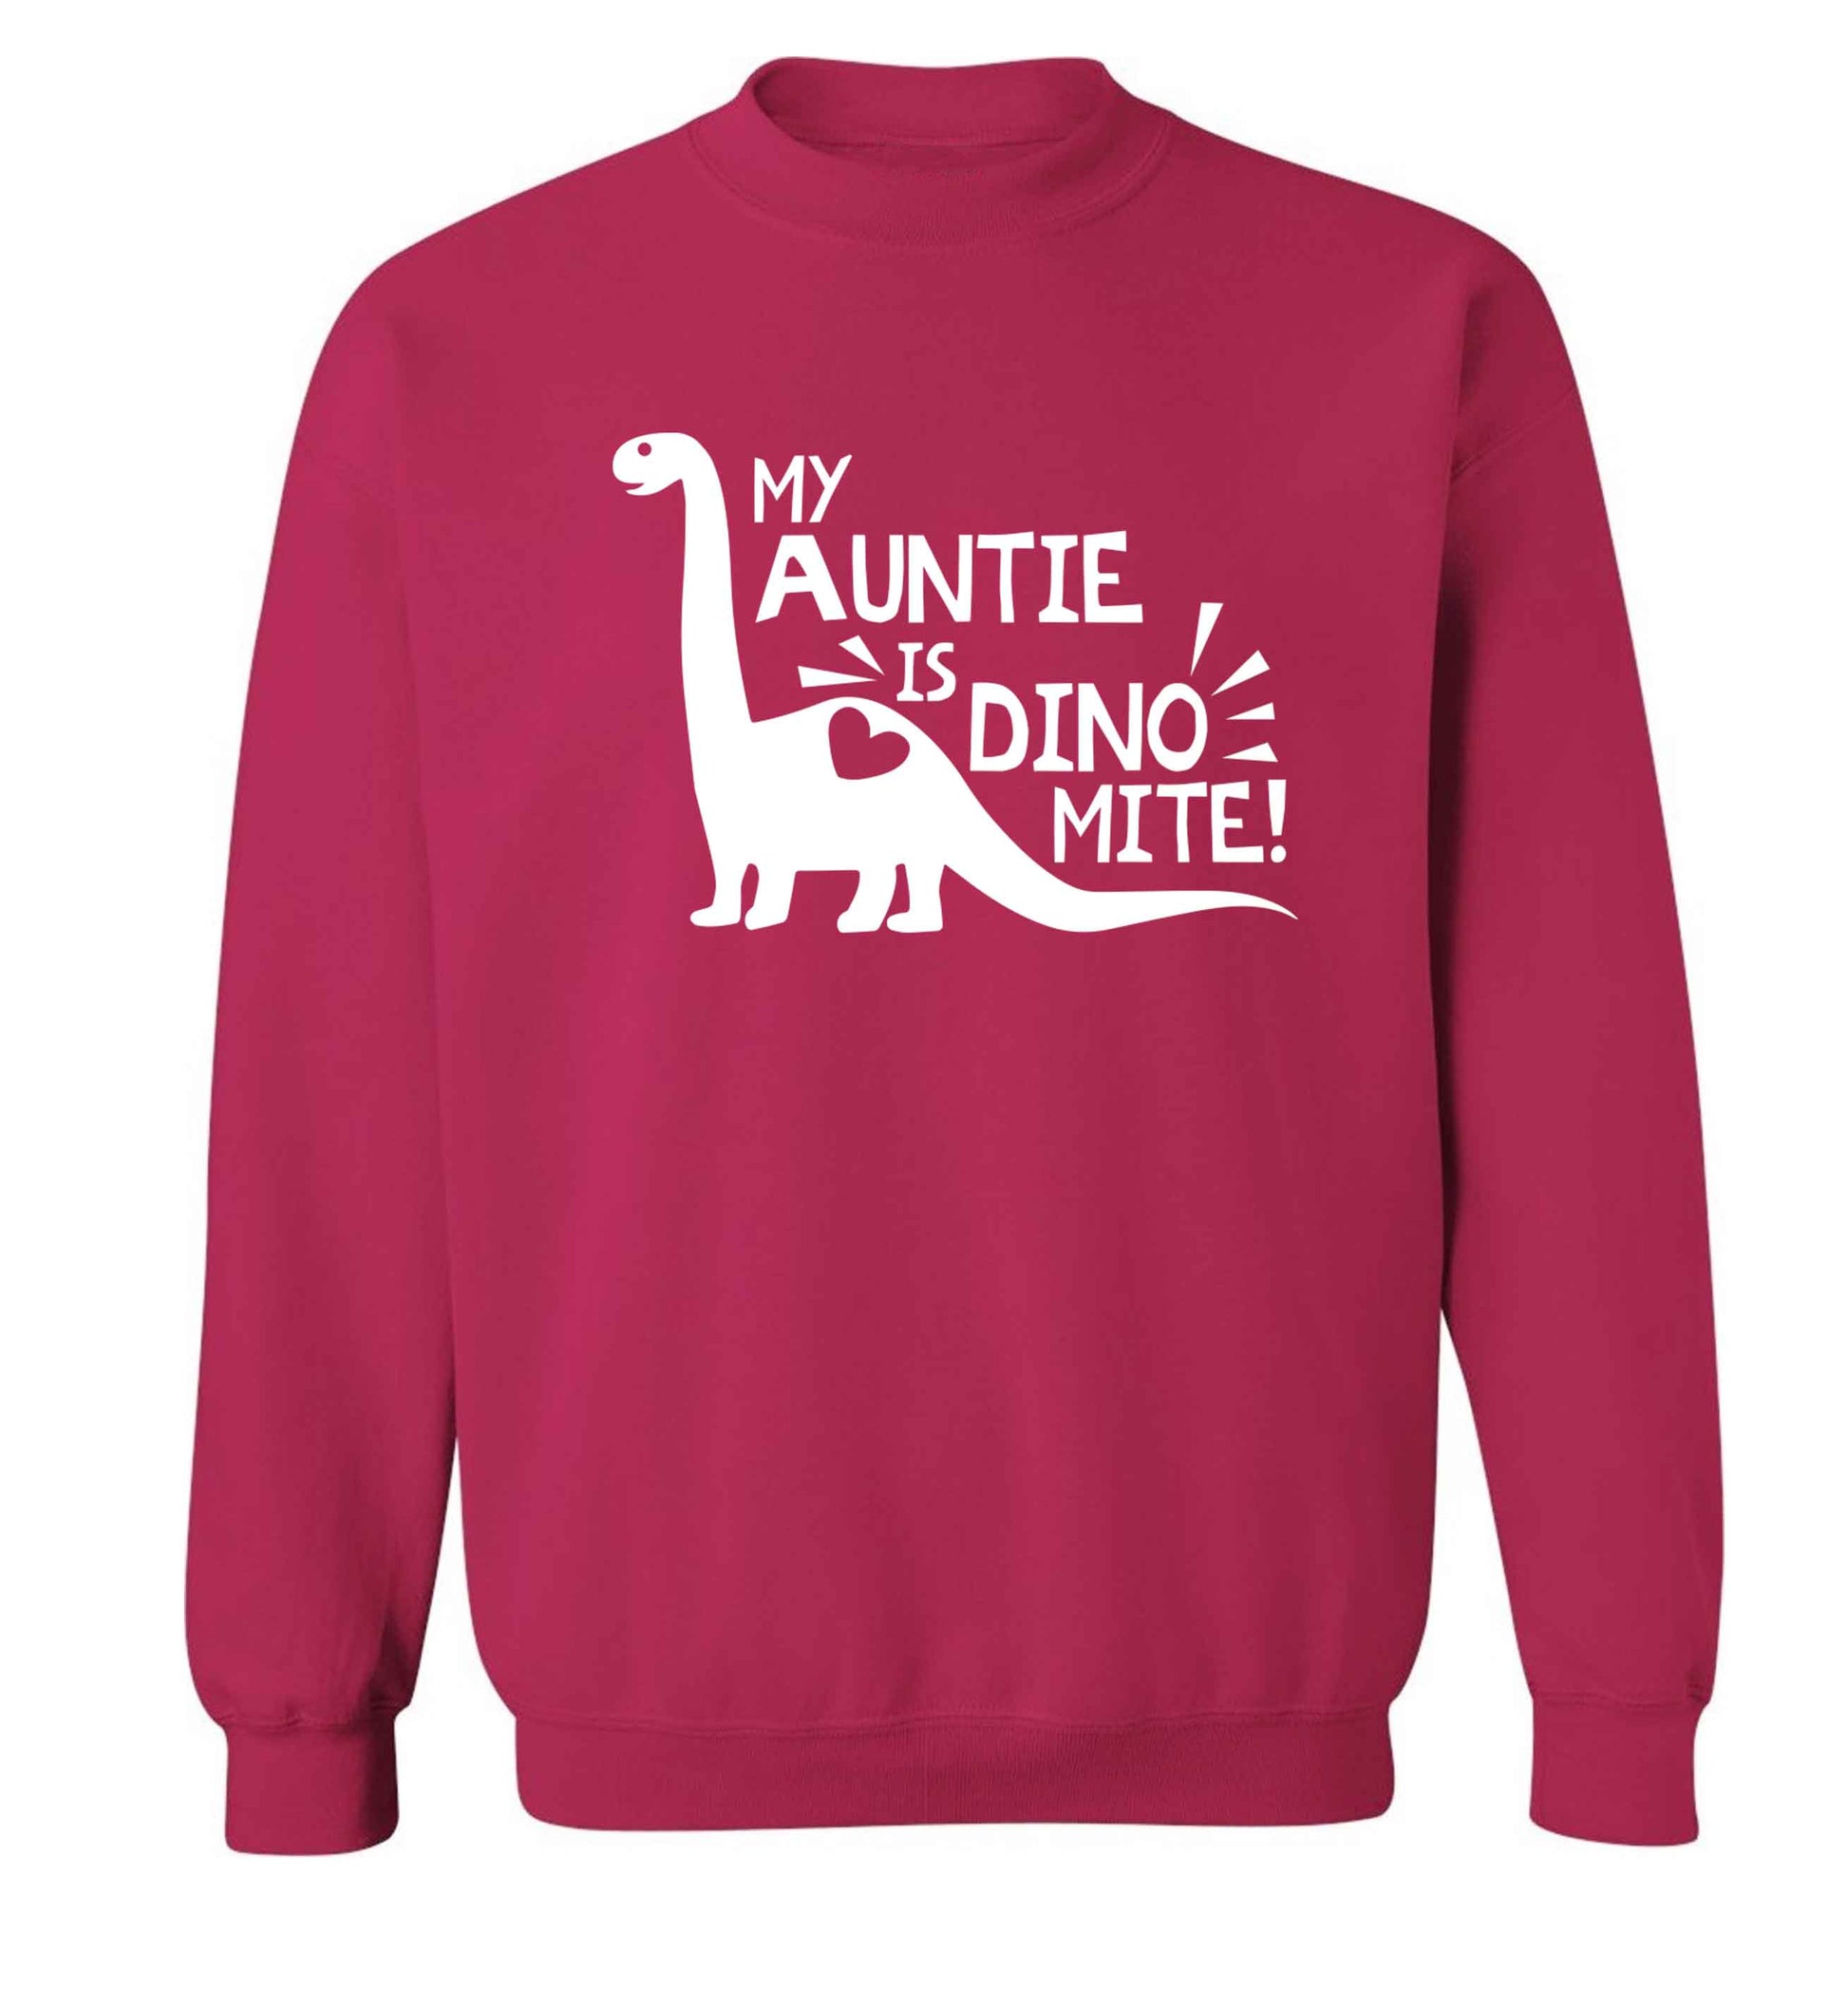 My auntie is dinomite! Adult's unisex pink Sweater 2XL